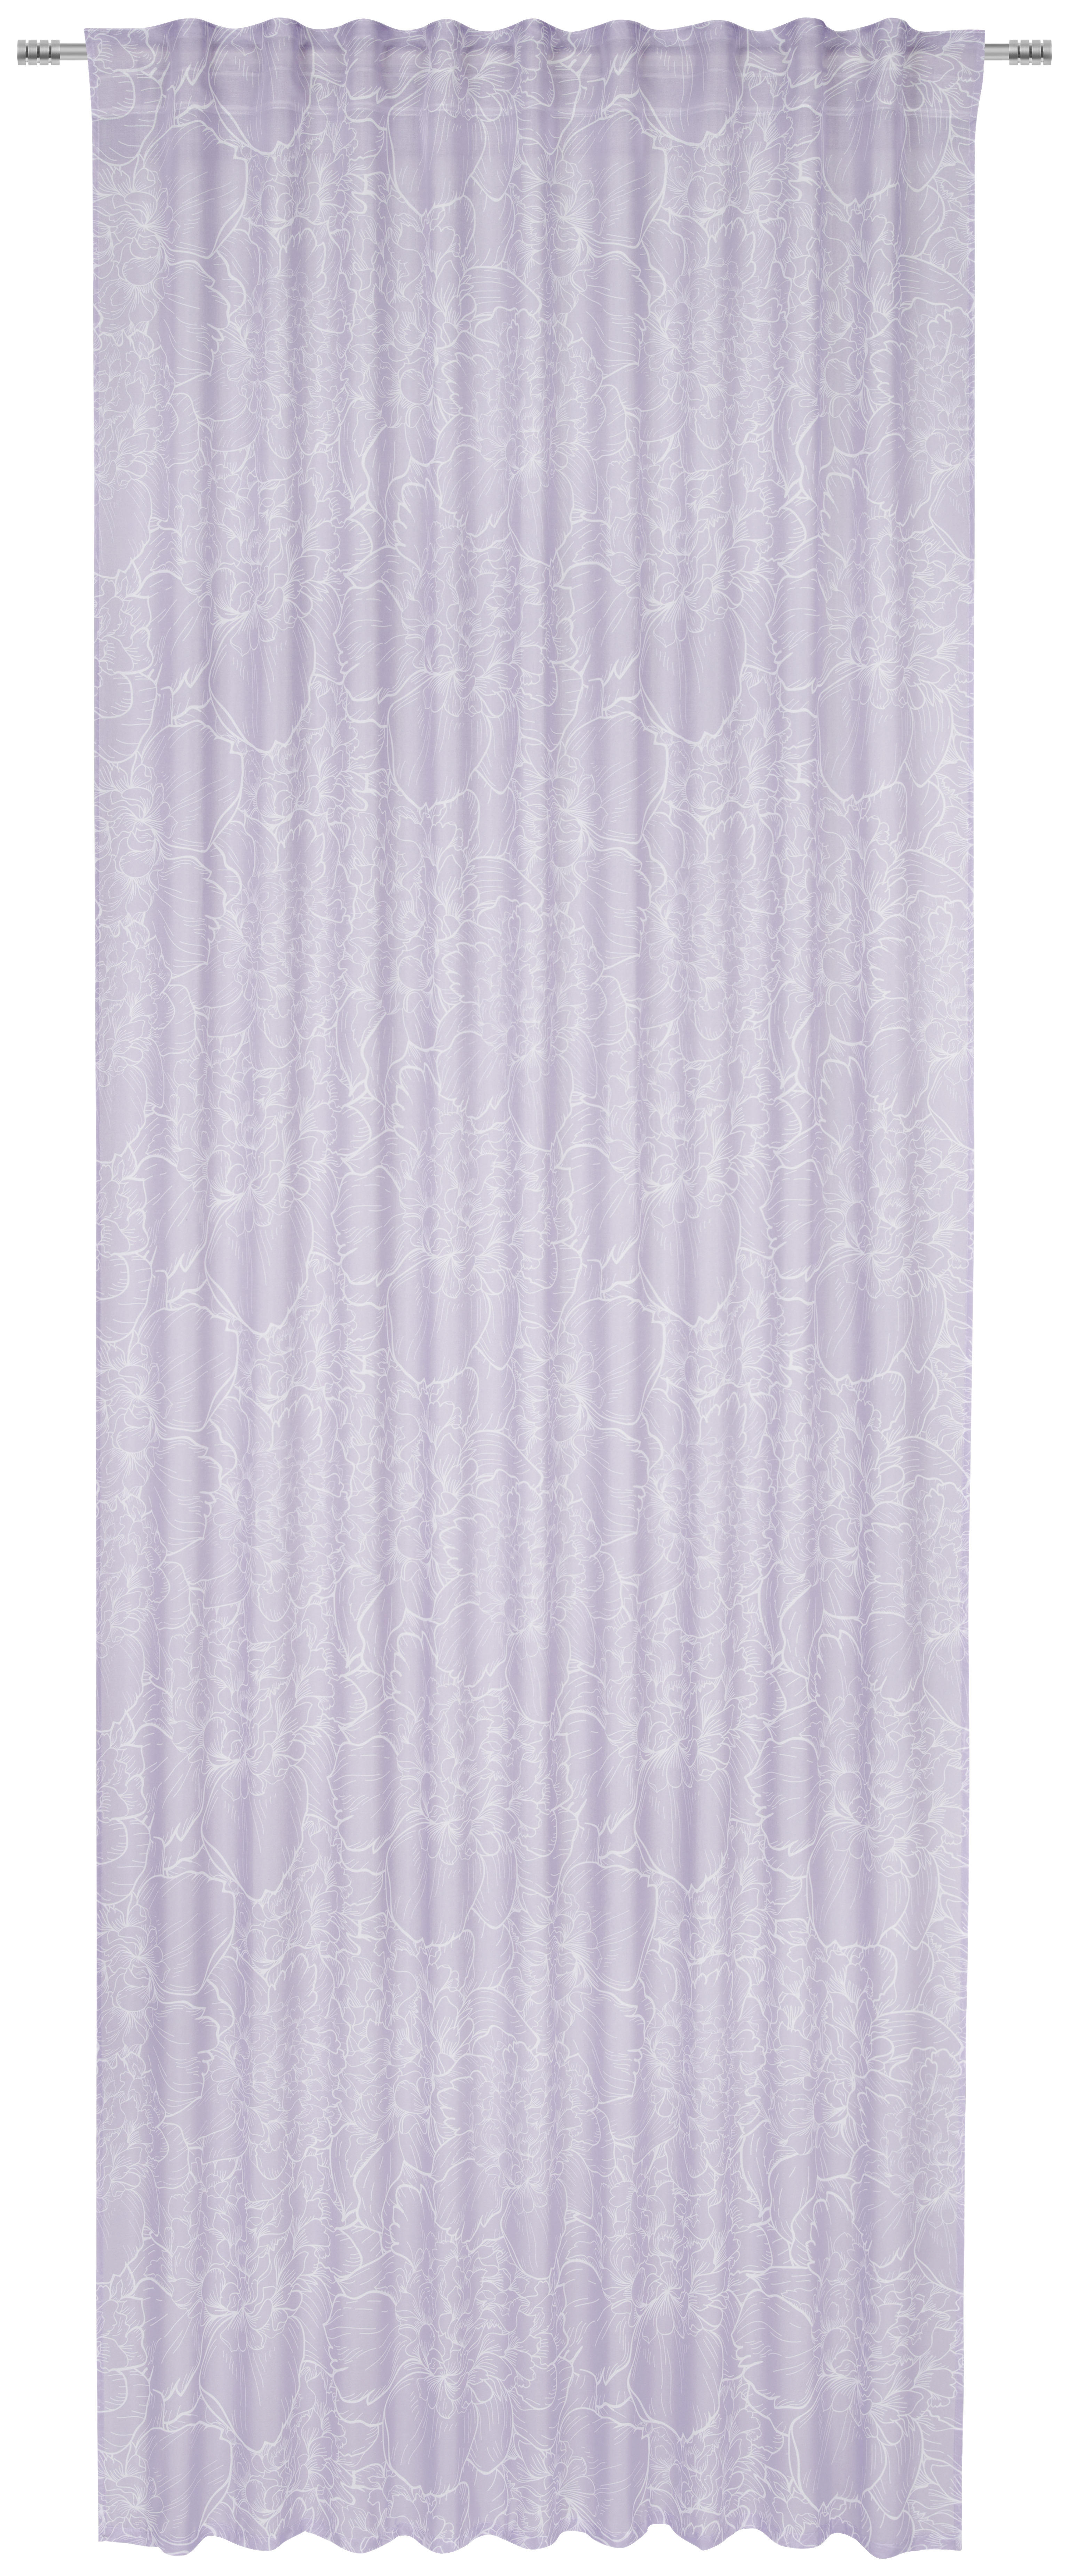 GARDINLÄNGD halvtransparent  - lila, Lifestyle, textil (140/245cm) - Esposa